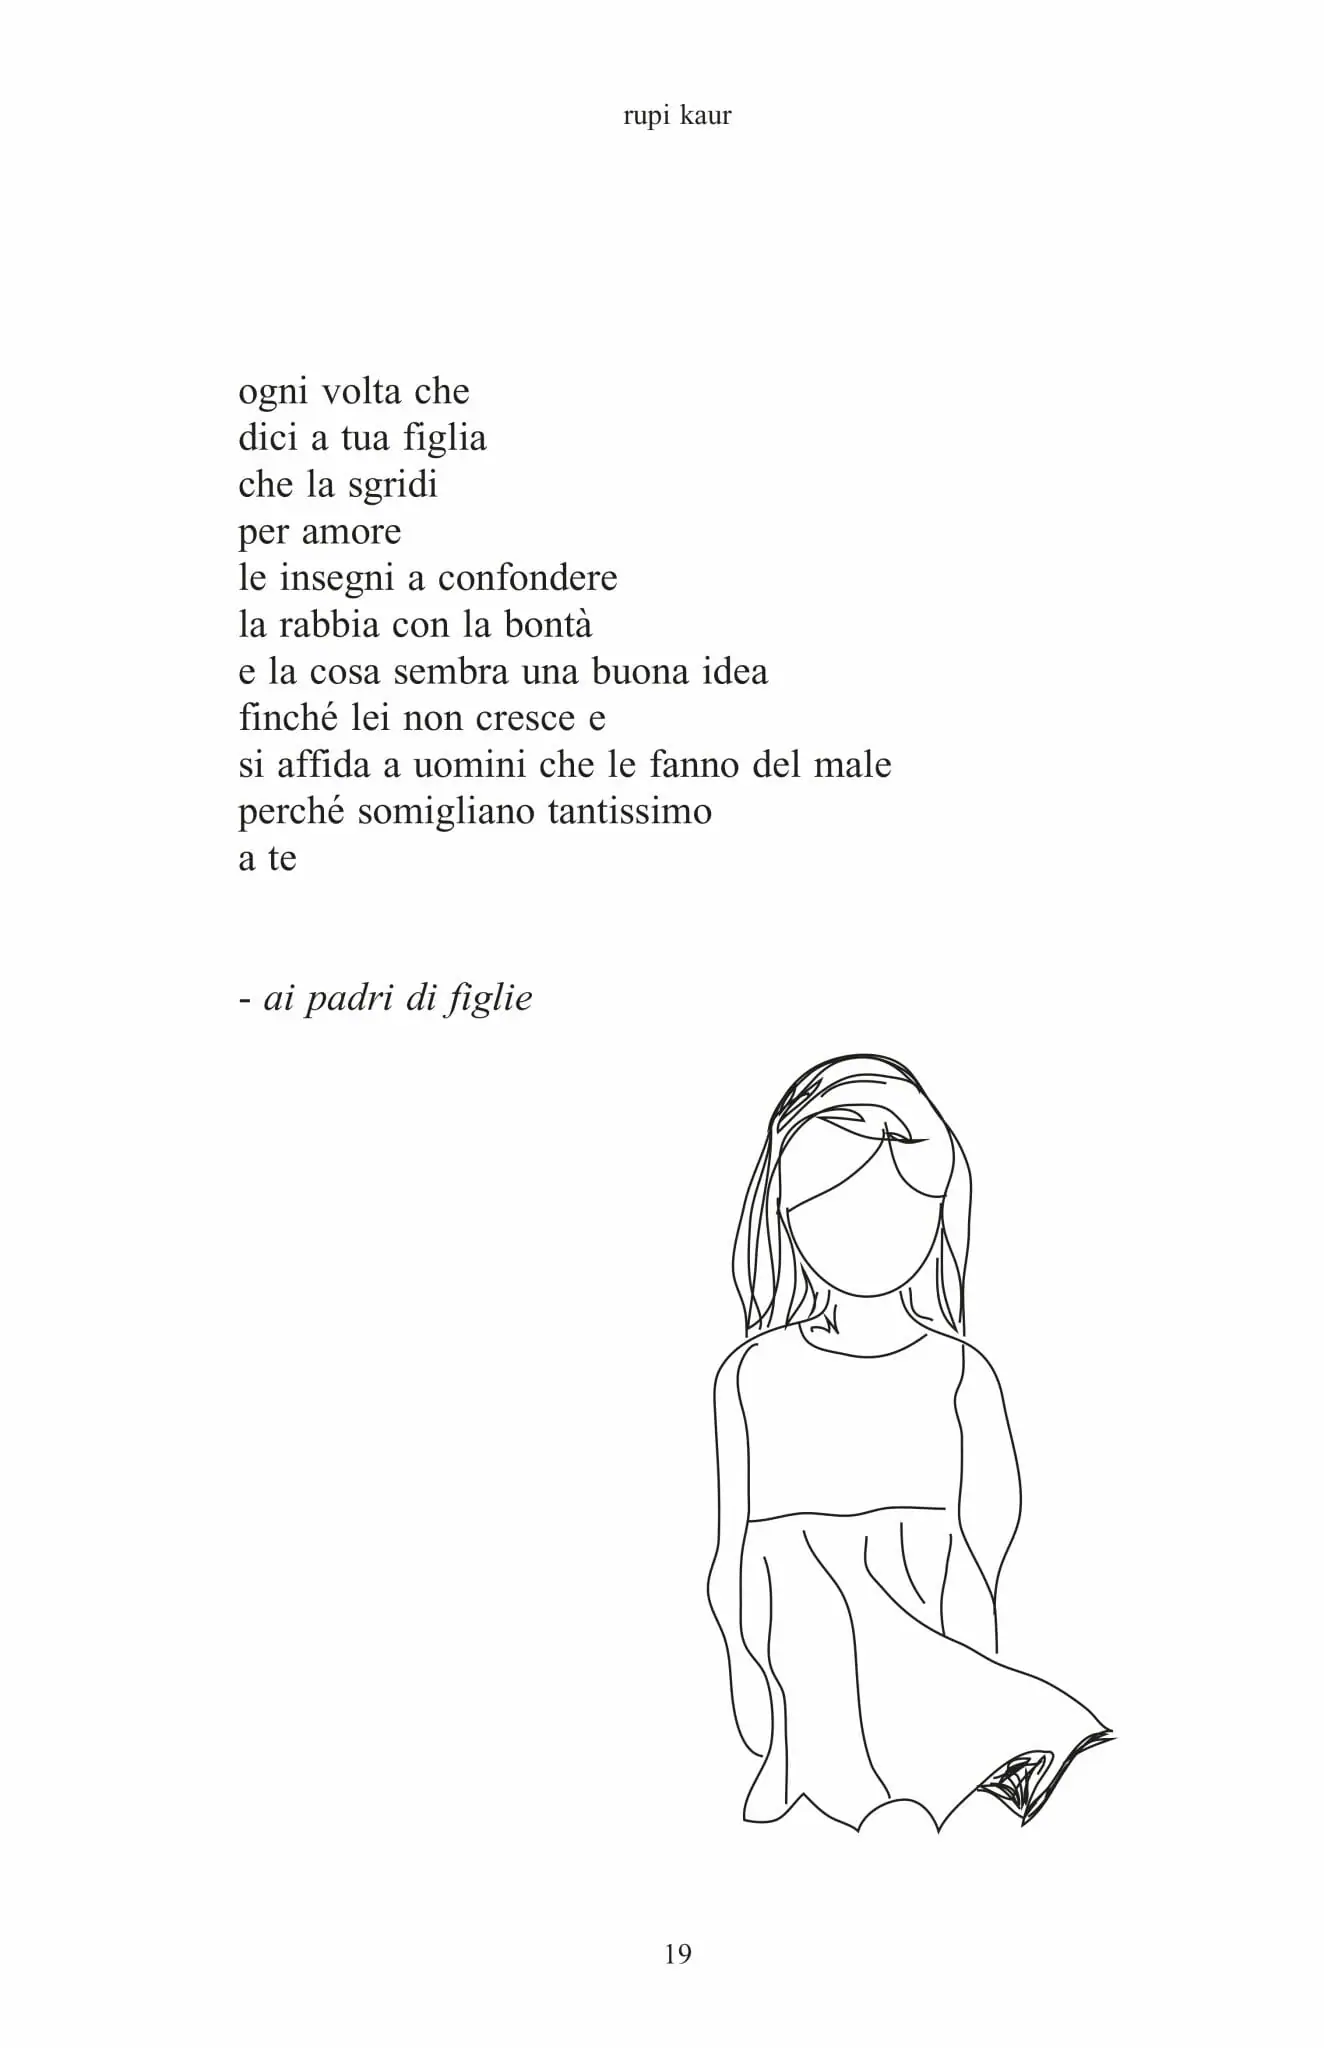 La poésie de Rupi Kaur - MademoiselleLit